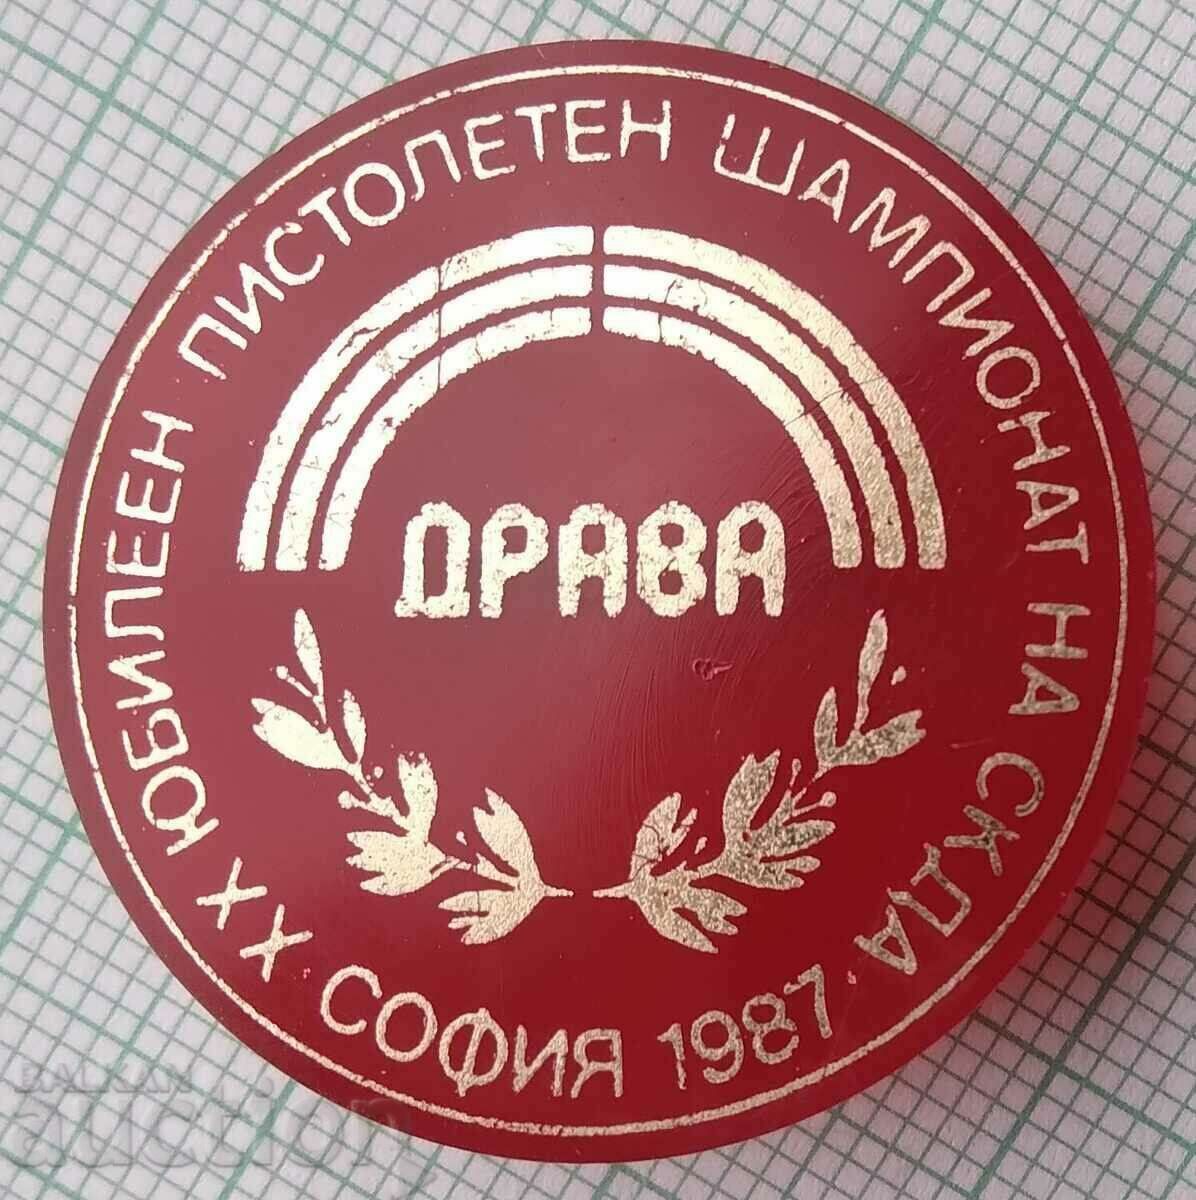 12307 Anniversary pistol championship of SKDA Drava 1987